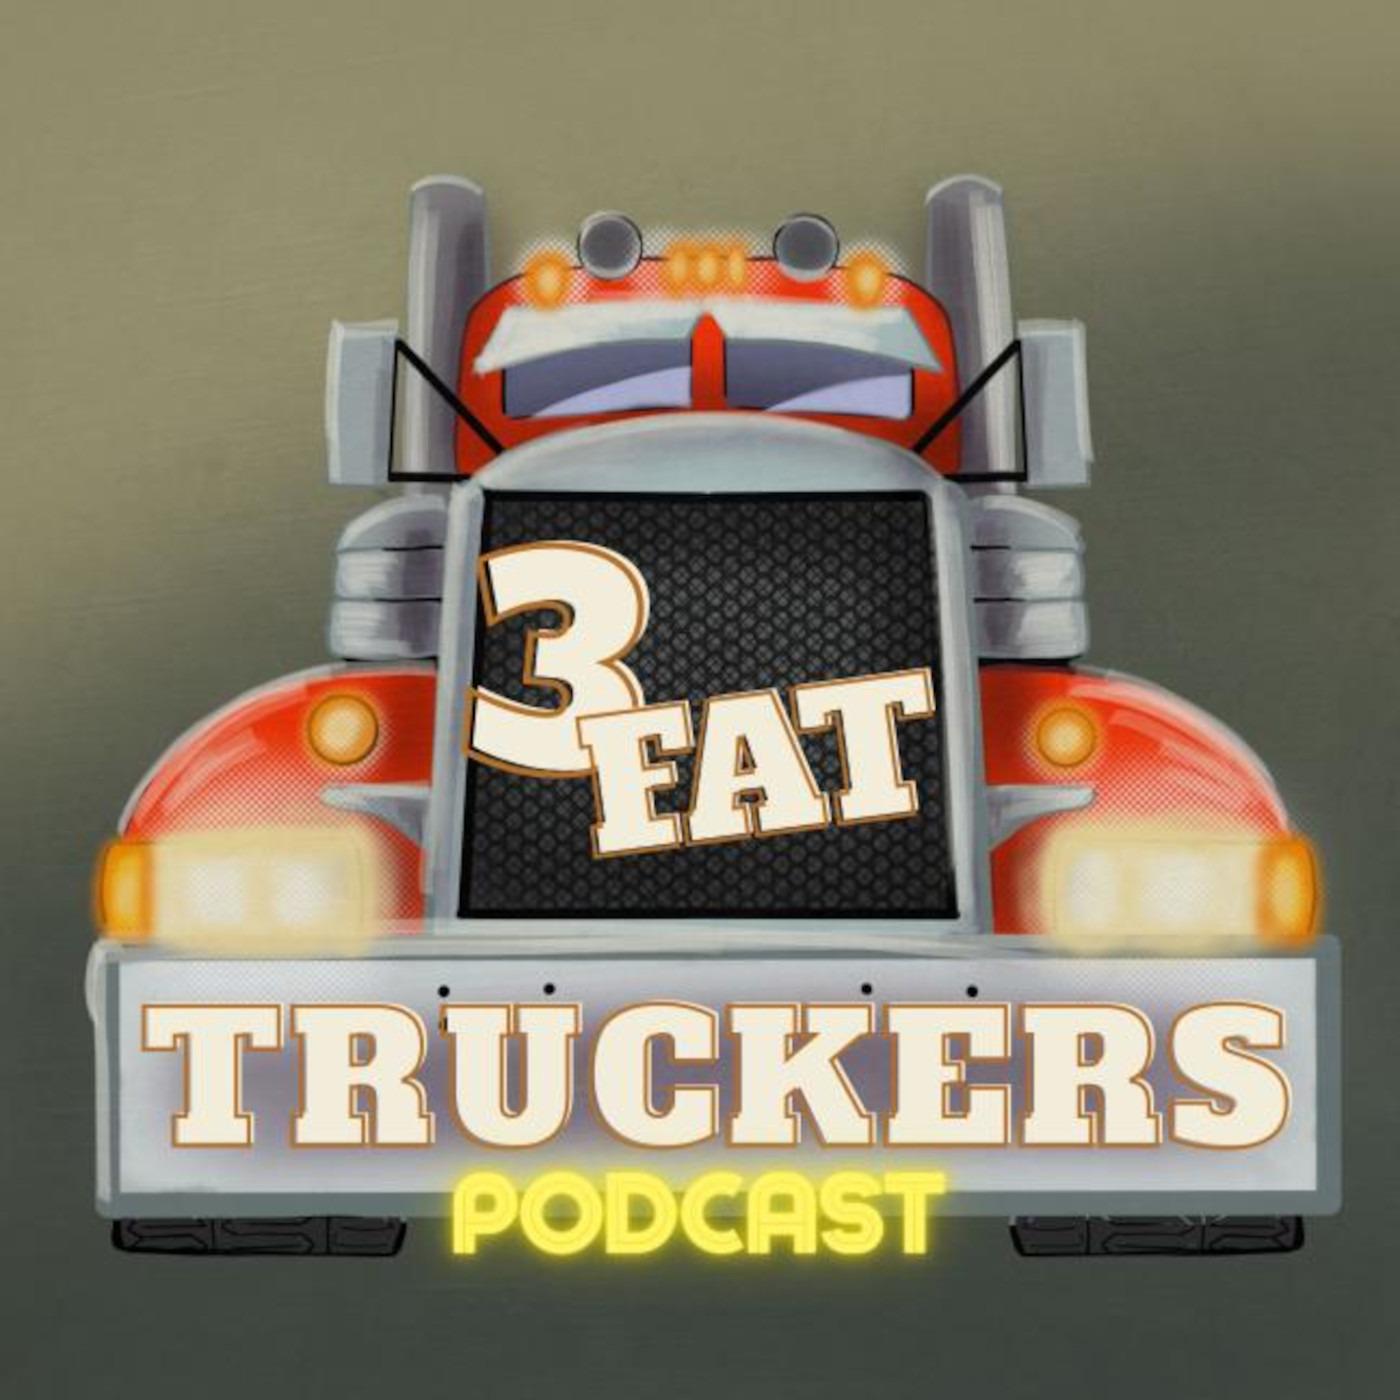 3 Fat Truckers